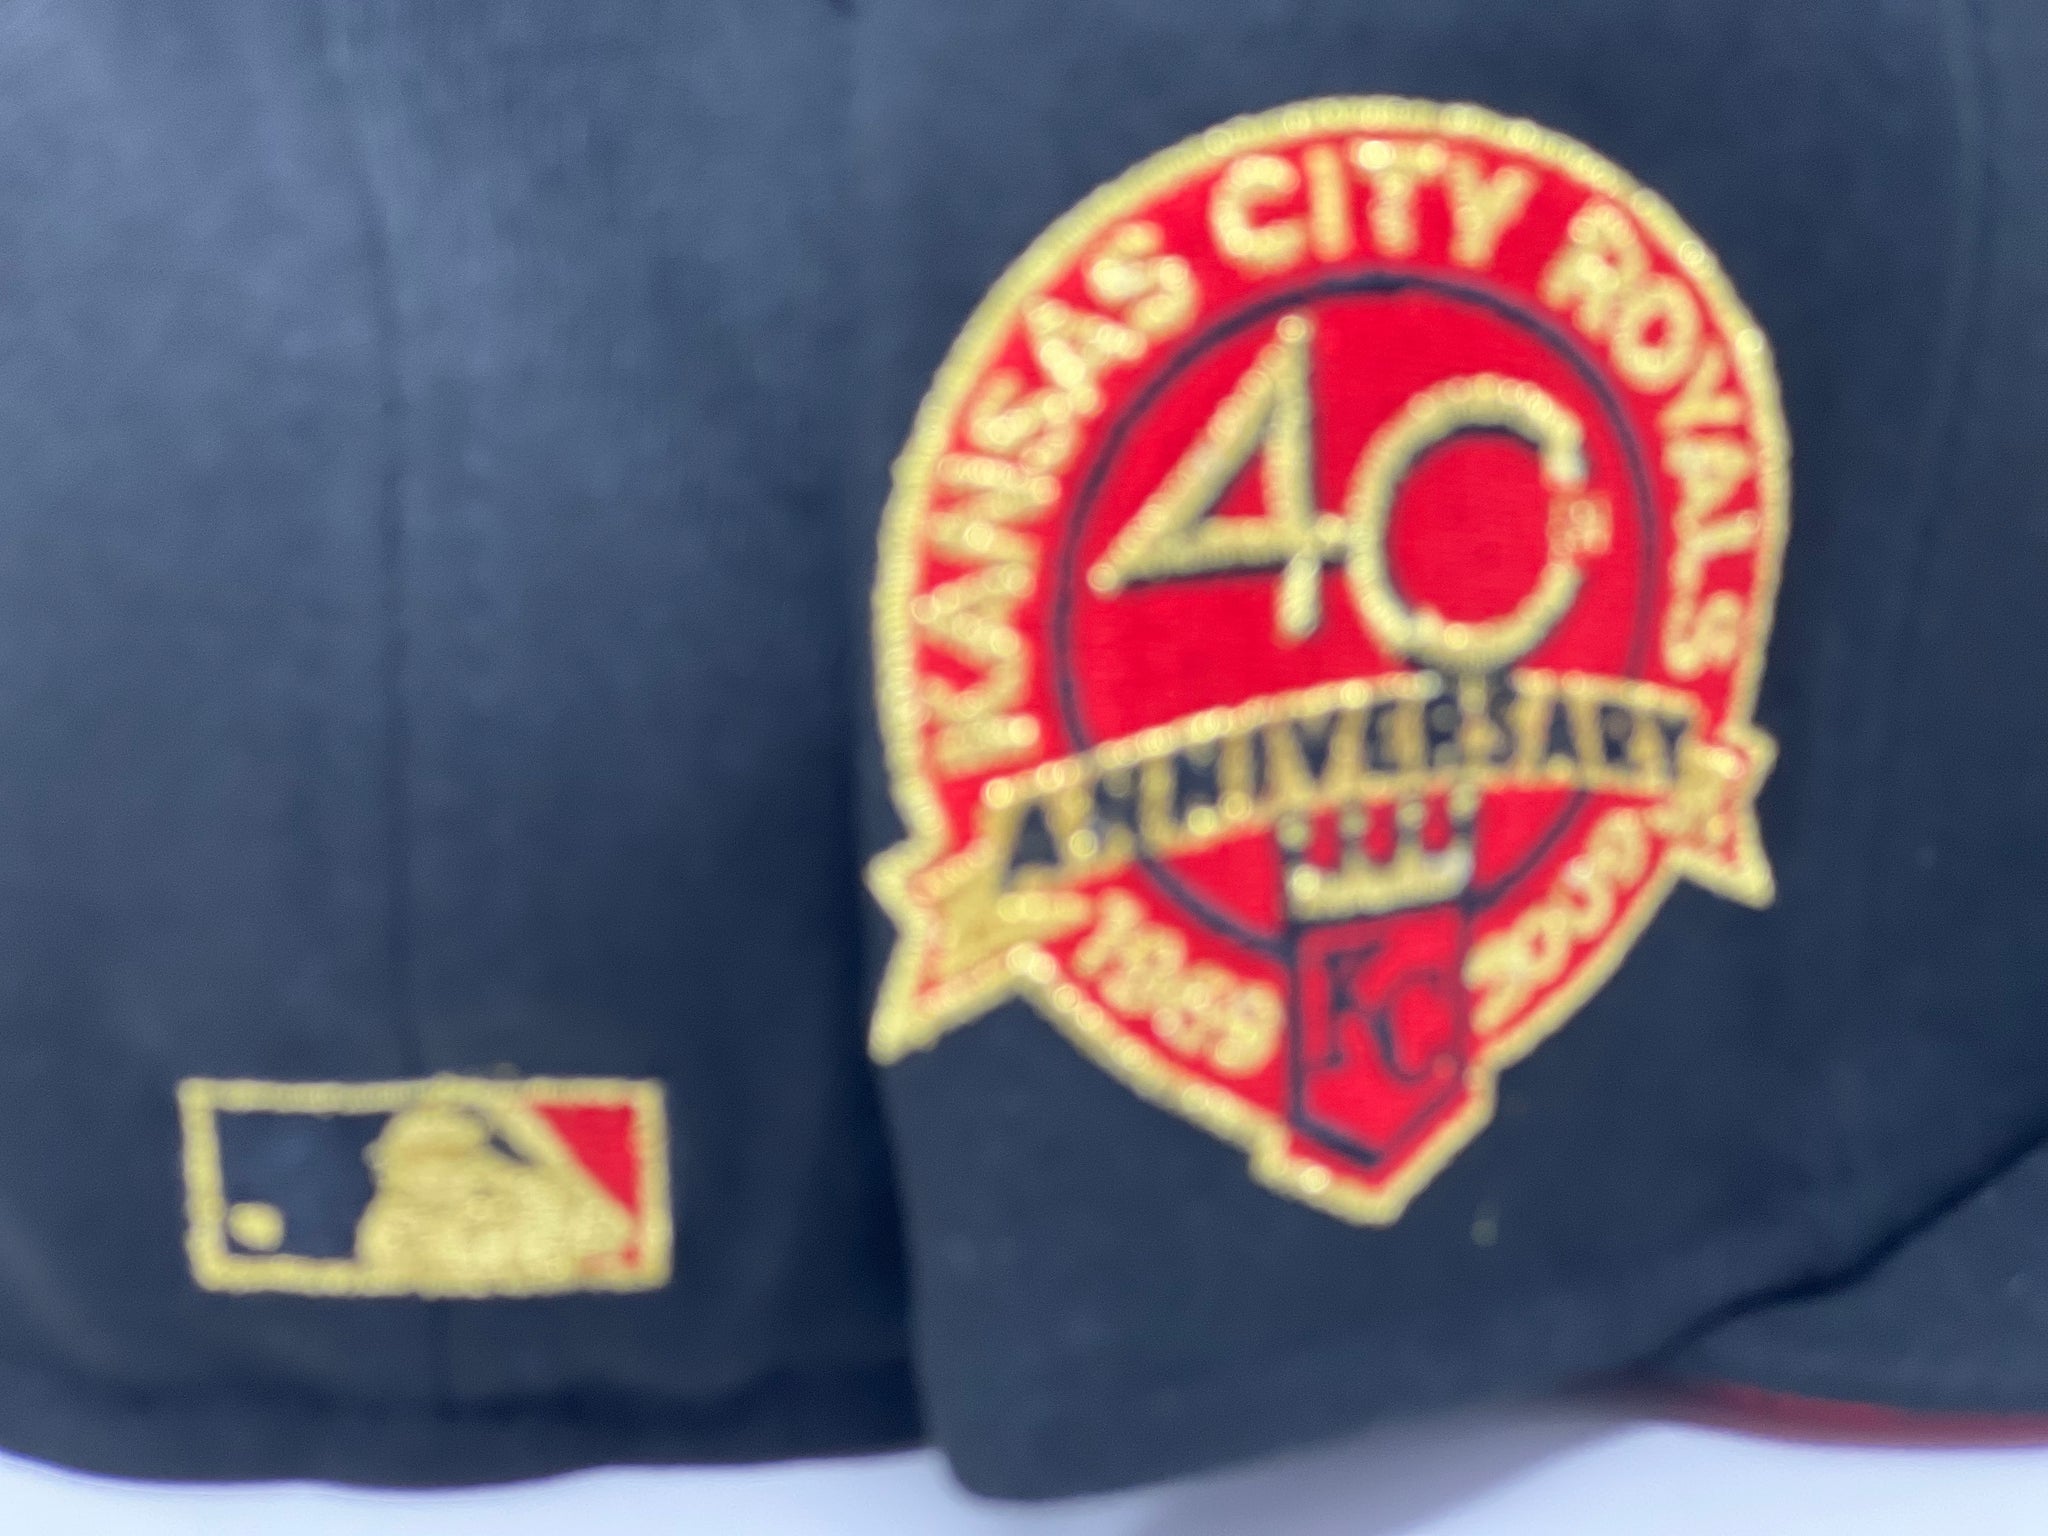 Men's Kansas City Royals New Era Gray/Black 40th Anniversary Undervisor  59FIFTY Fitted Hat